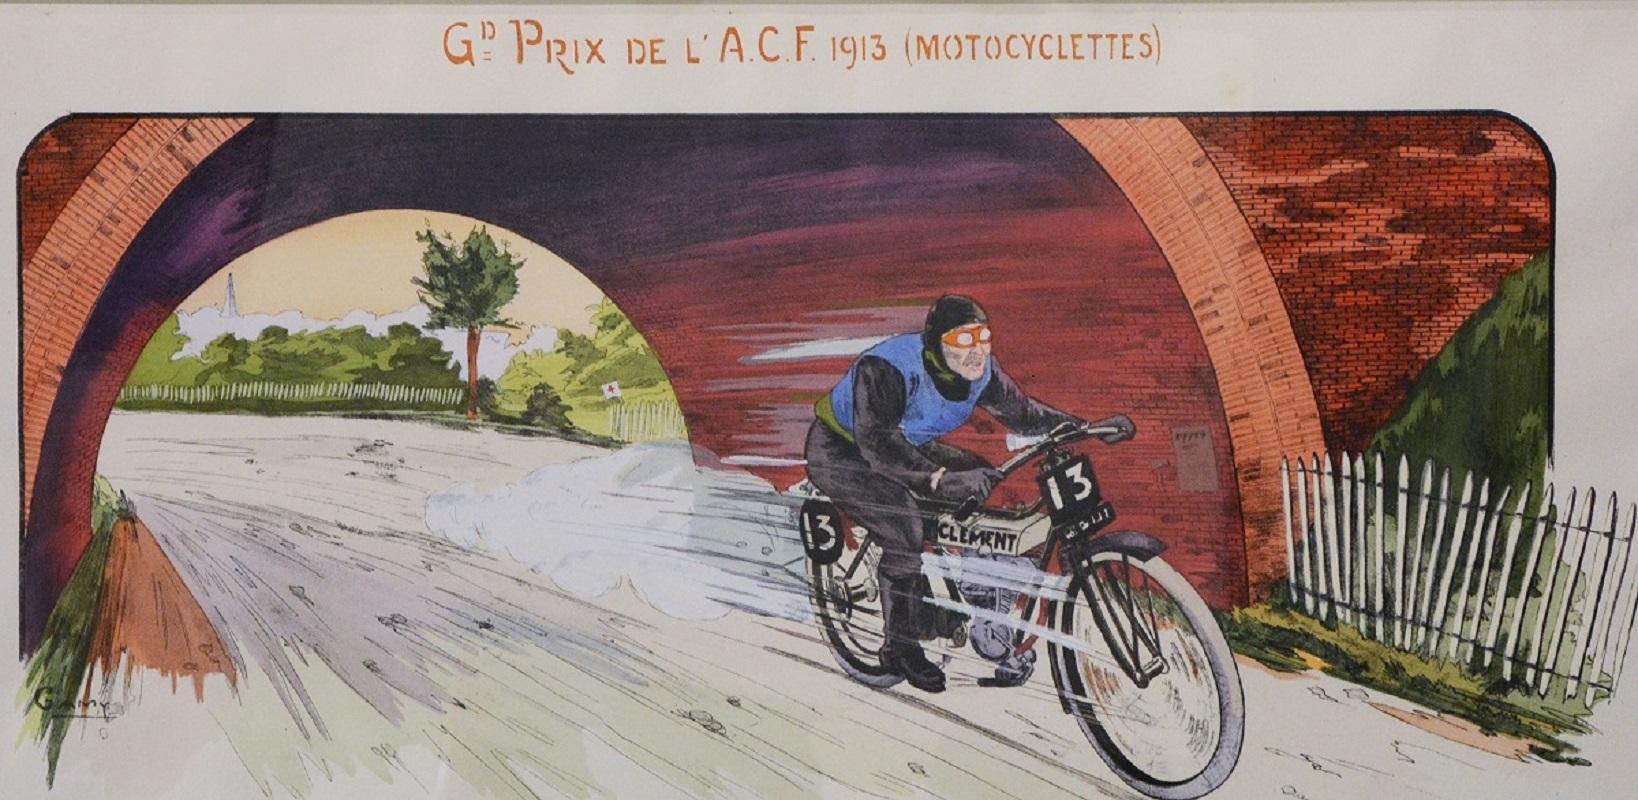 Grand Prix de l’A.C.F. 1913 (Motocyclettes). - Art Deco Print by Unknown